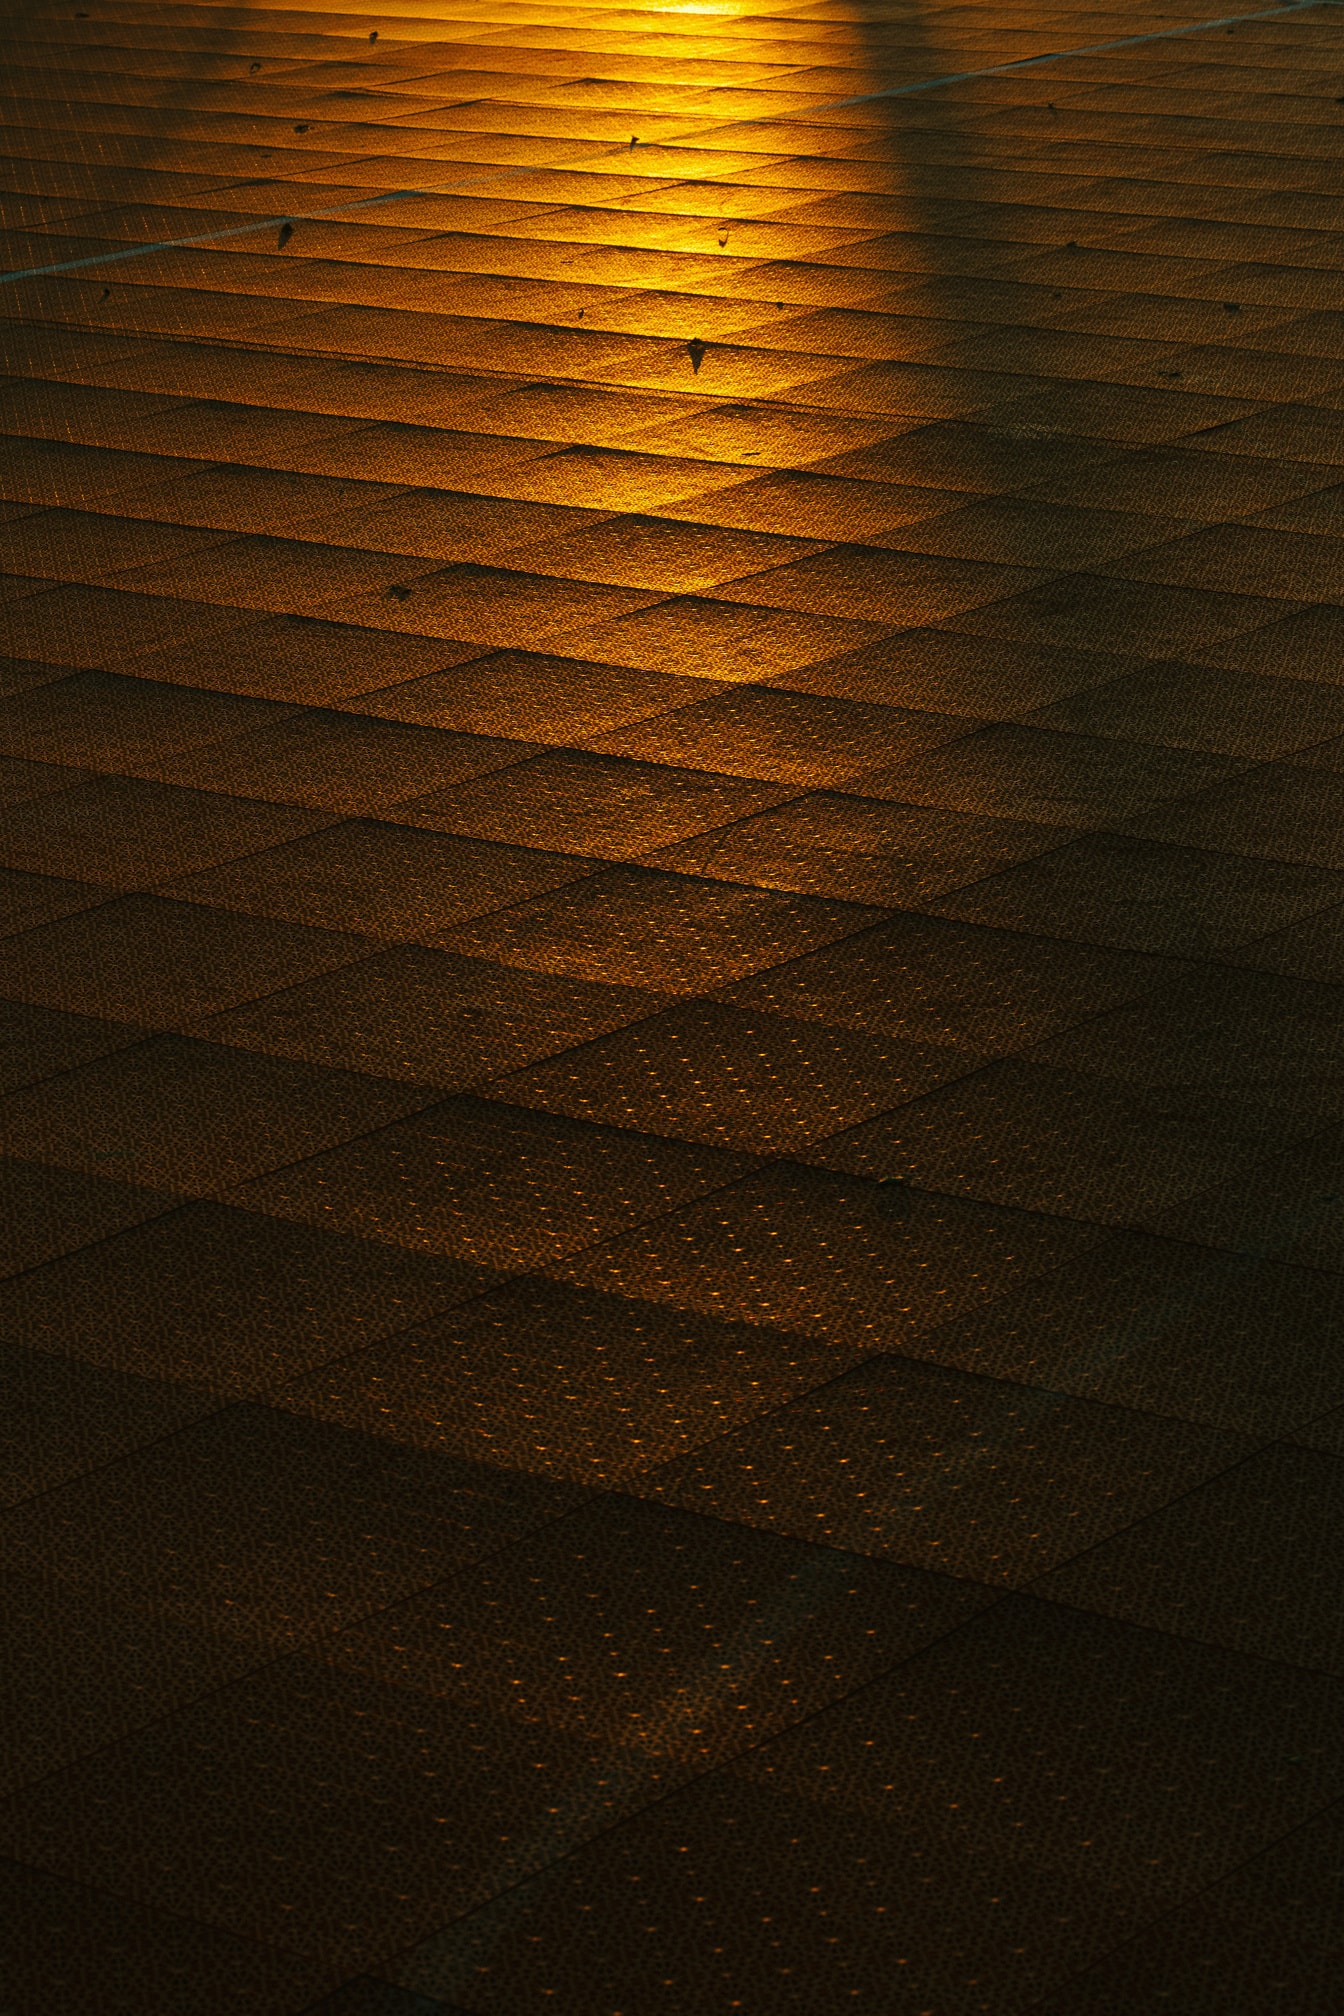 Orange gul sollys refleksion på jorden med plastoverflade i skumringen